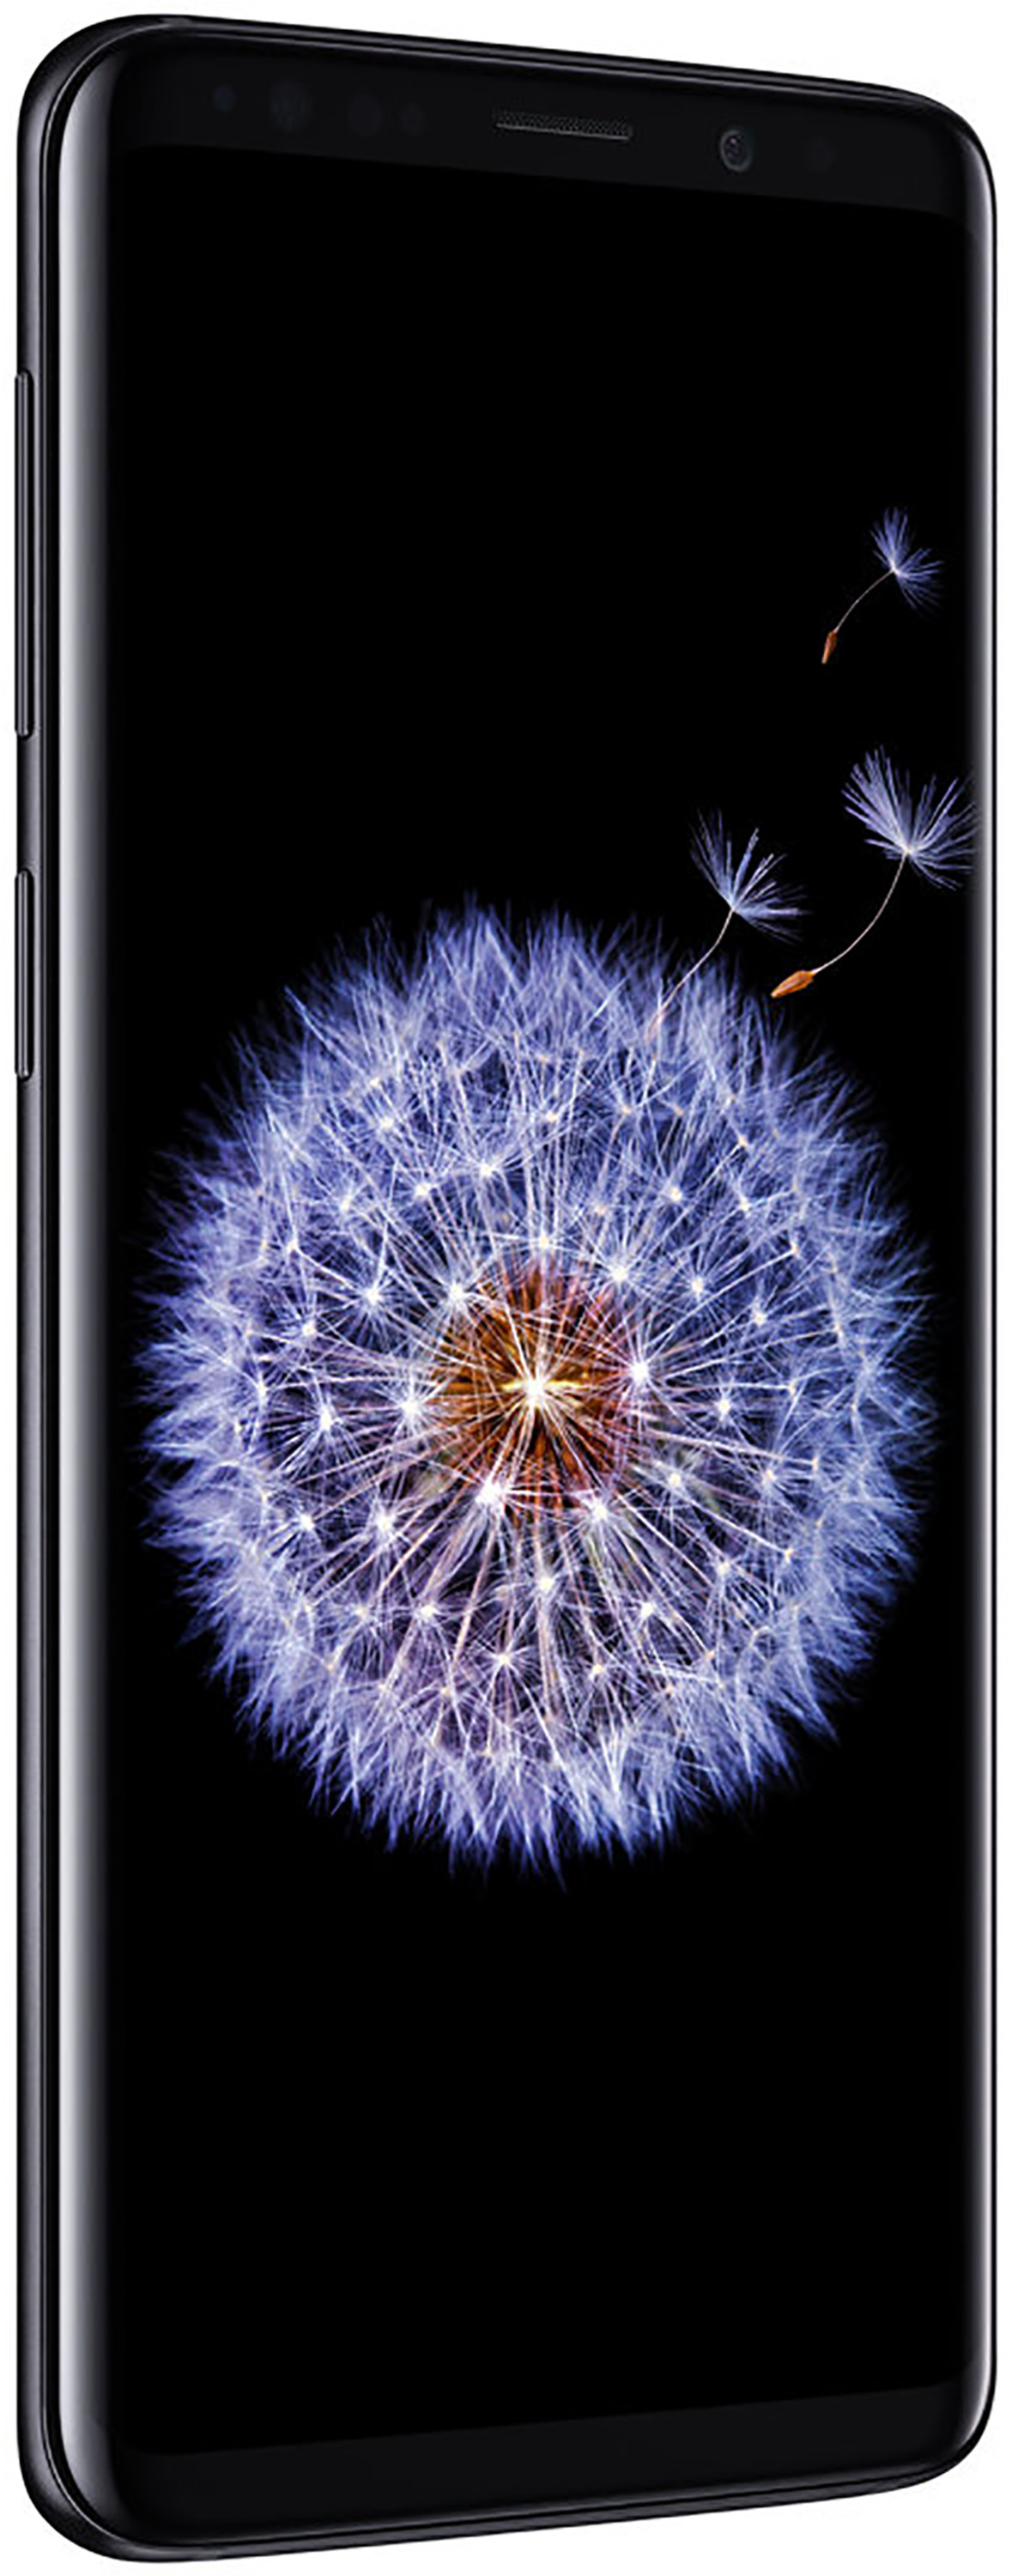 Restored SAMSUNG Galaxy S9 G960U 64GB Unlocked GSM/CDMA 4G LTE Phone with 12MP Camera (USA Version) - Midnight Black (Refurbished) - image 3 of 6